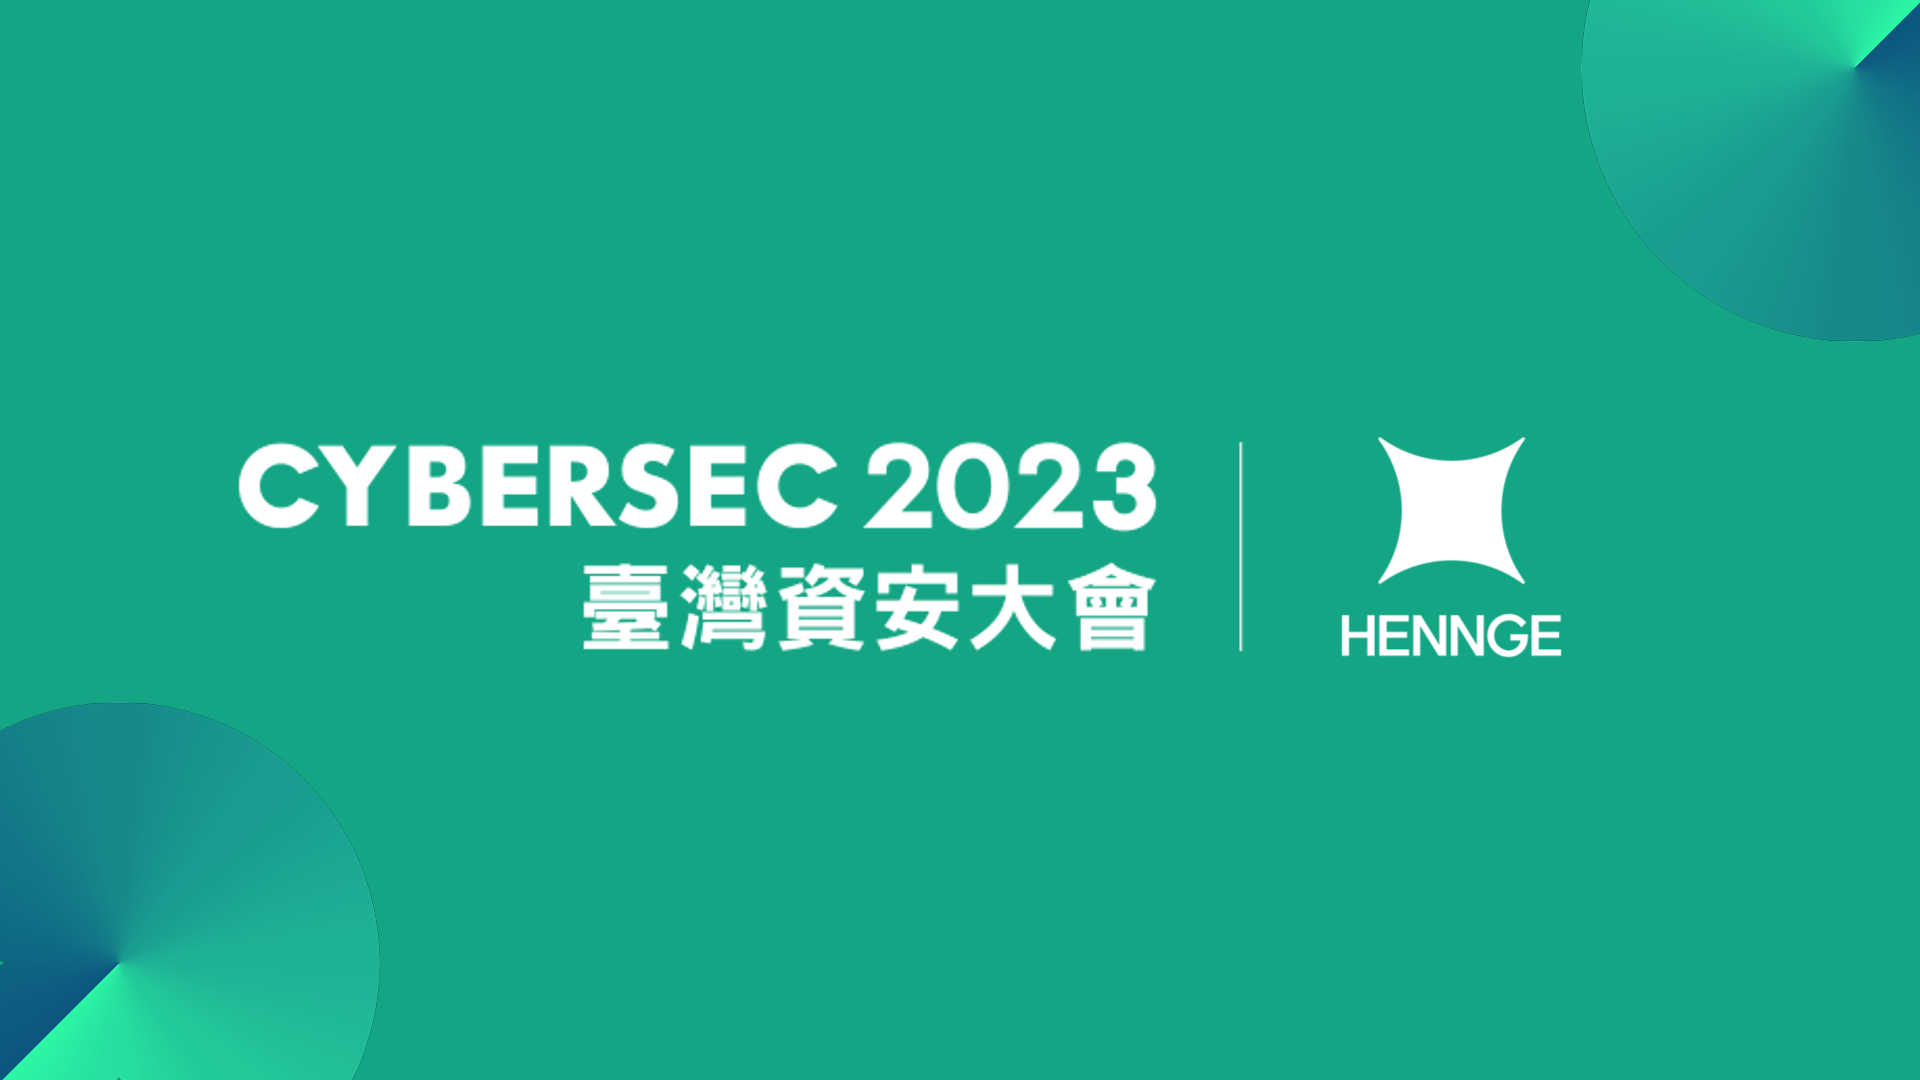 HENNGE 成為 2023 臺灣資安大會白金級贊助商